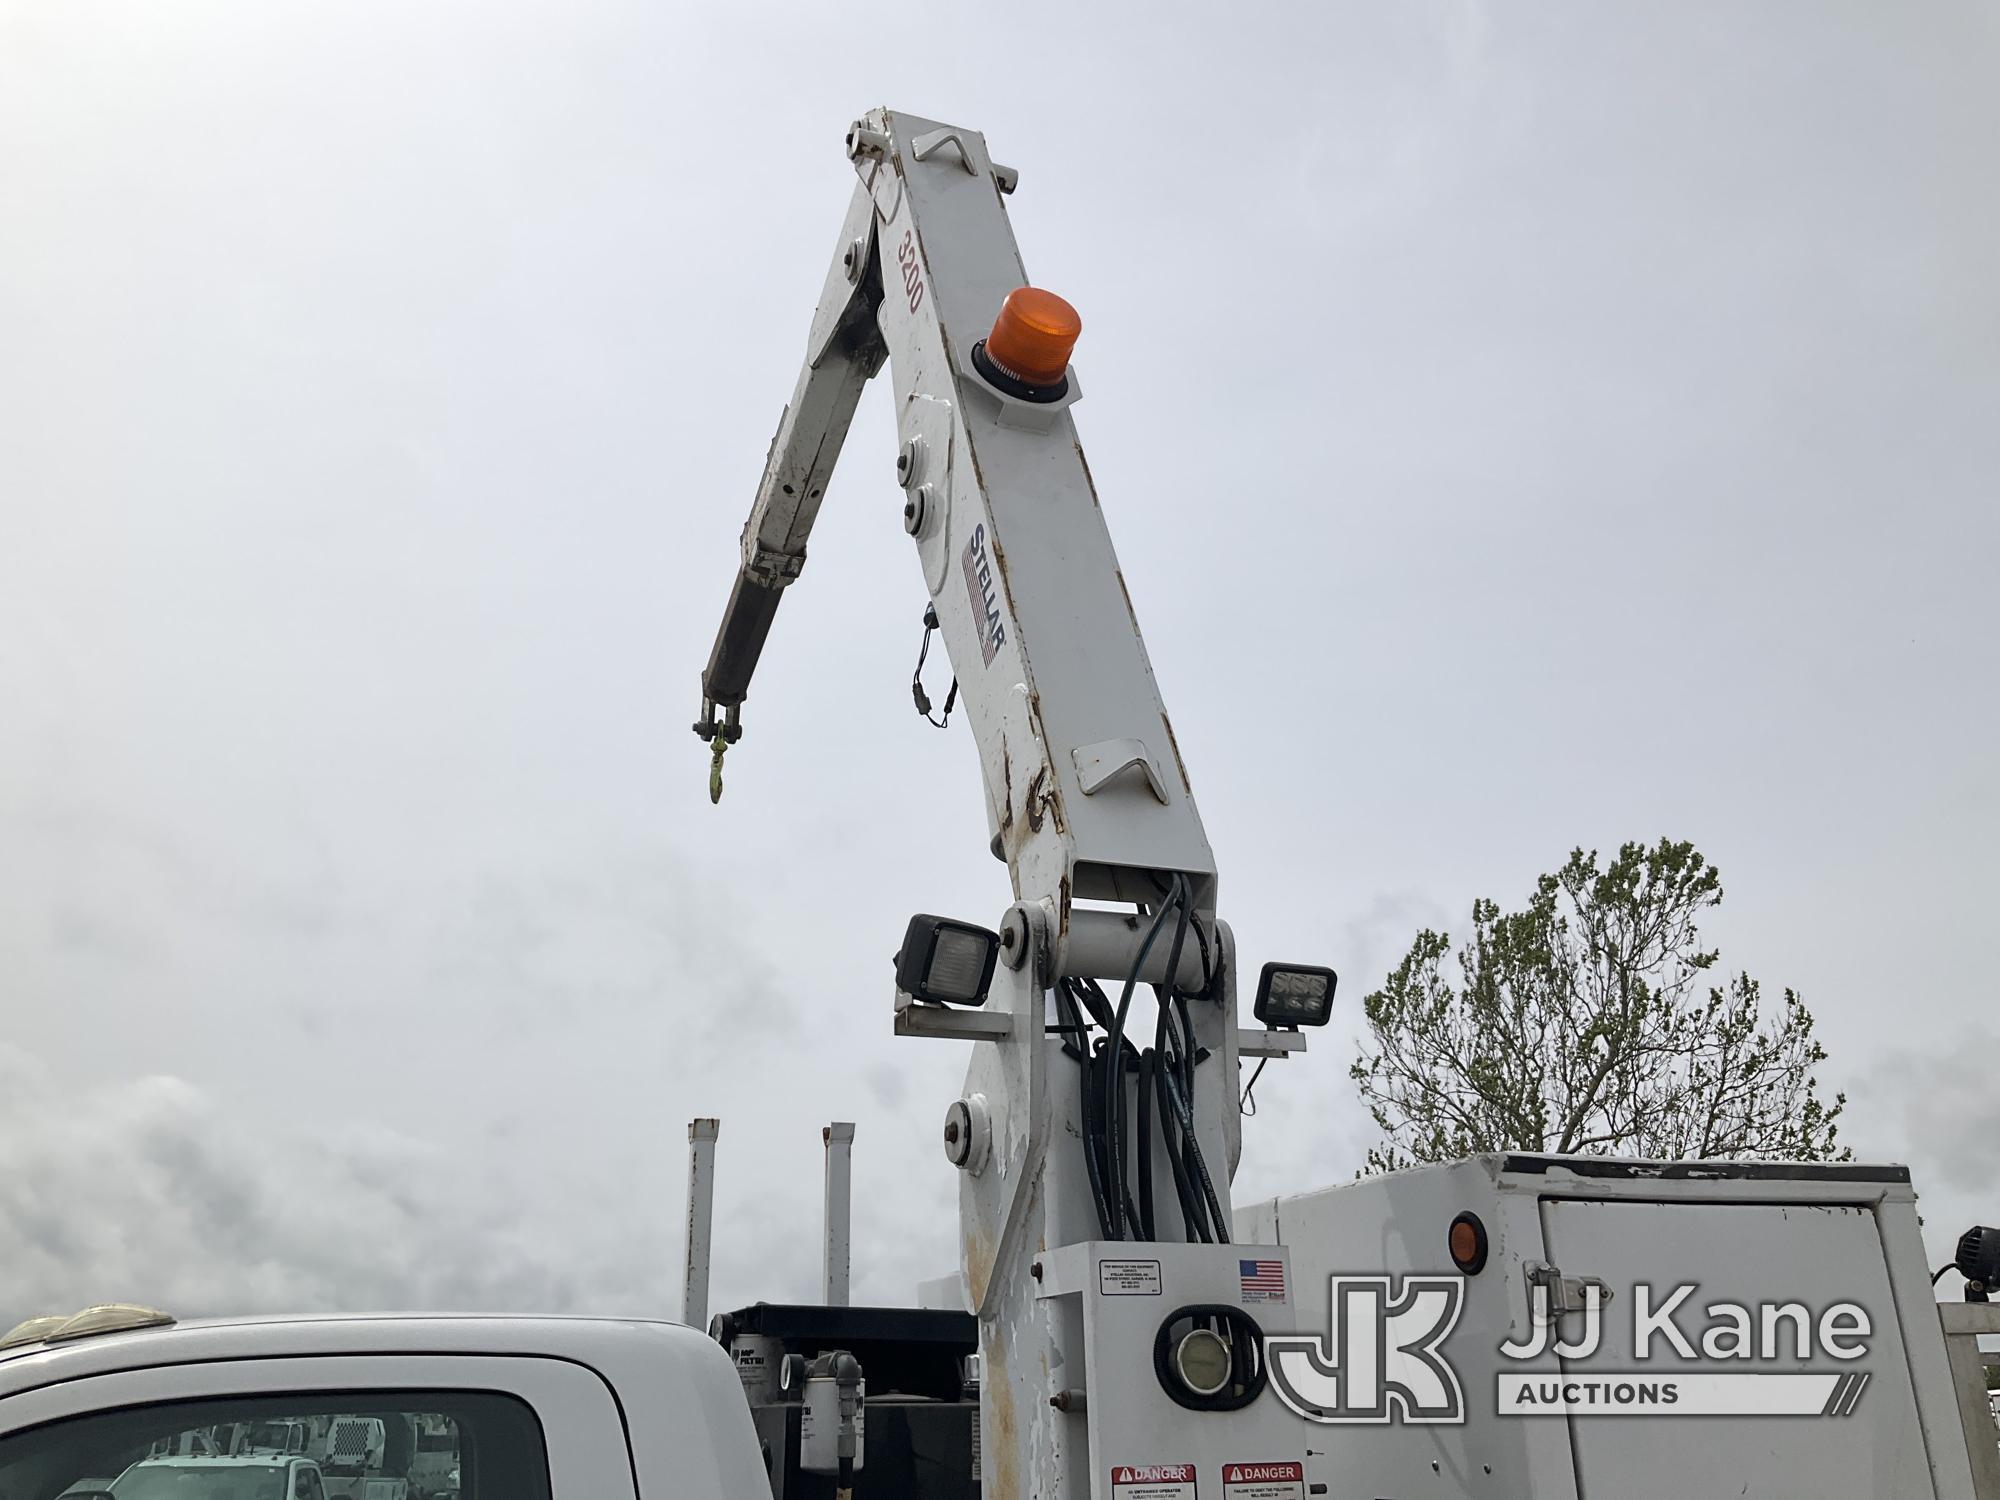 (Kansas City, MO) Stellar 3200A, Knuckleboom Crane mounted behind cab on 2014 RAM 5500 Flatbed/Servi